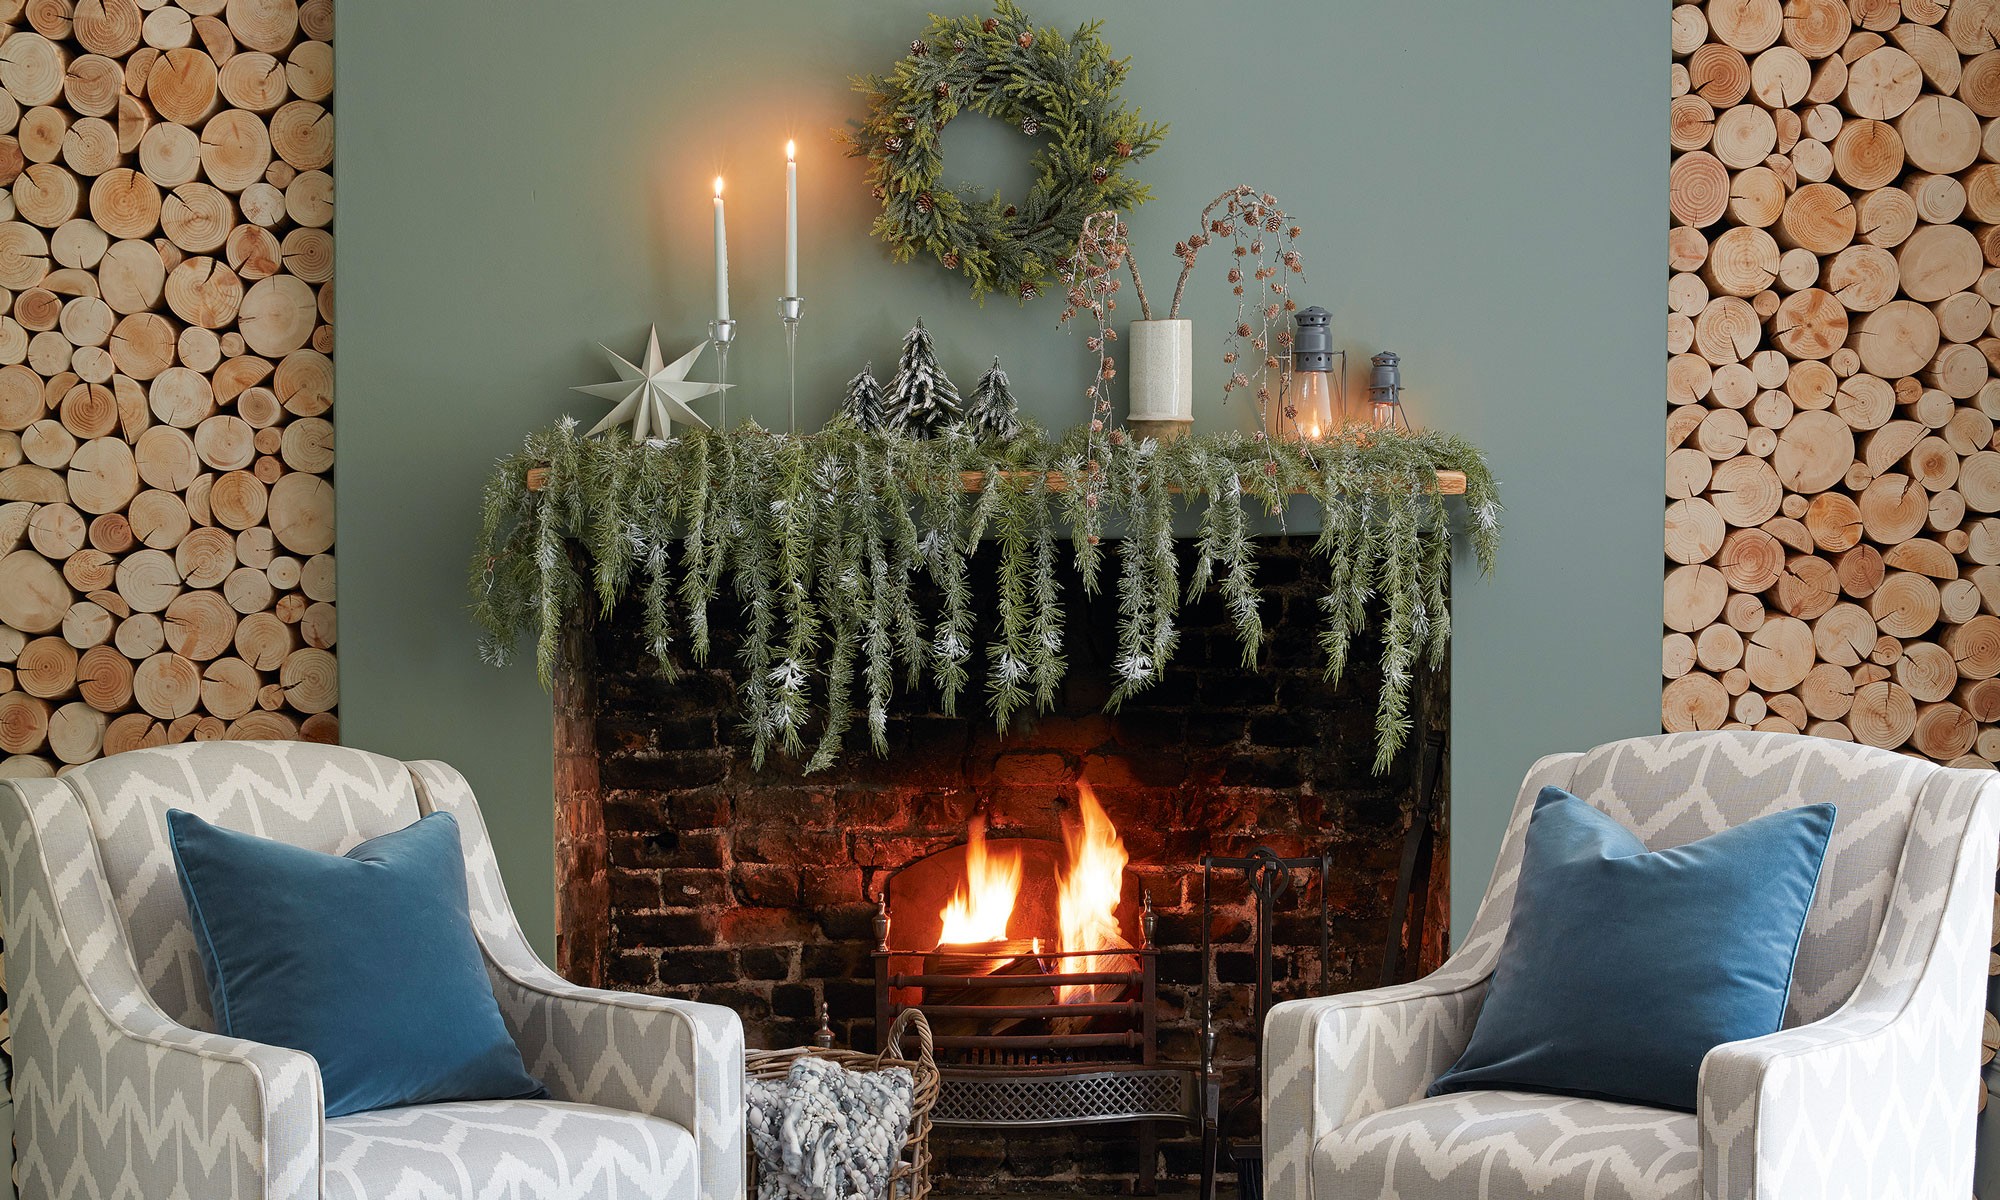 5 stylish Christmas home decor ideas from Maisons du Monde